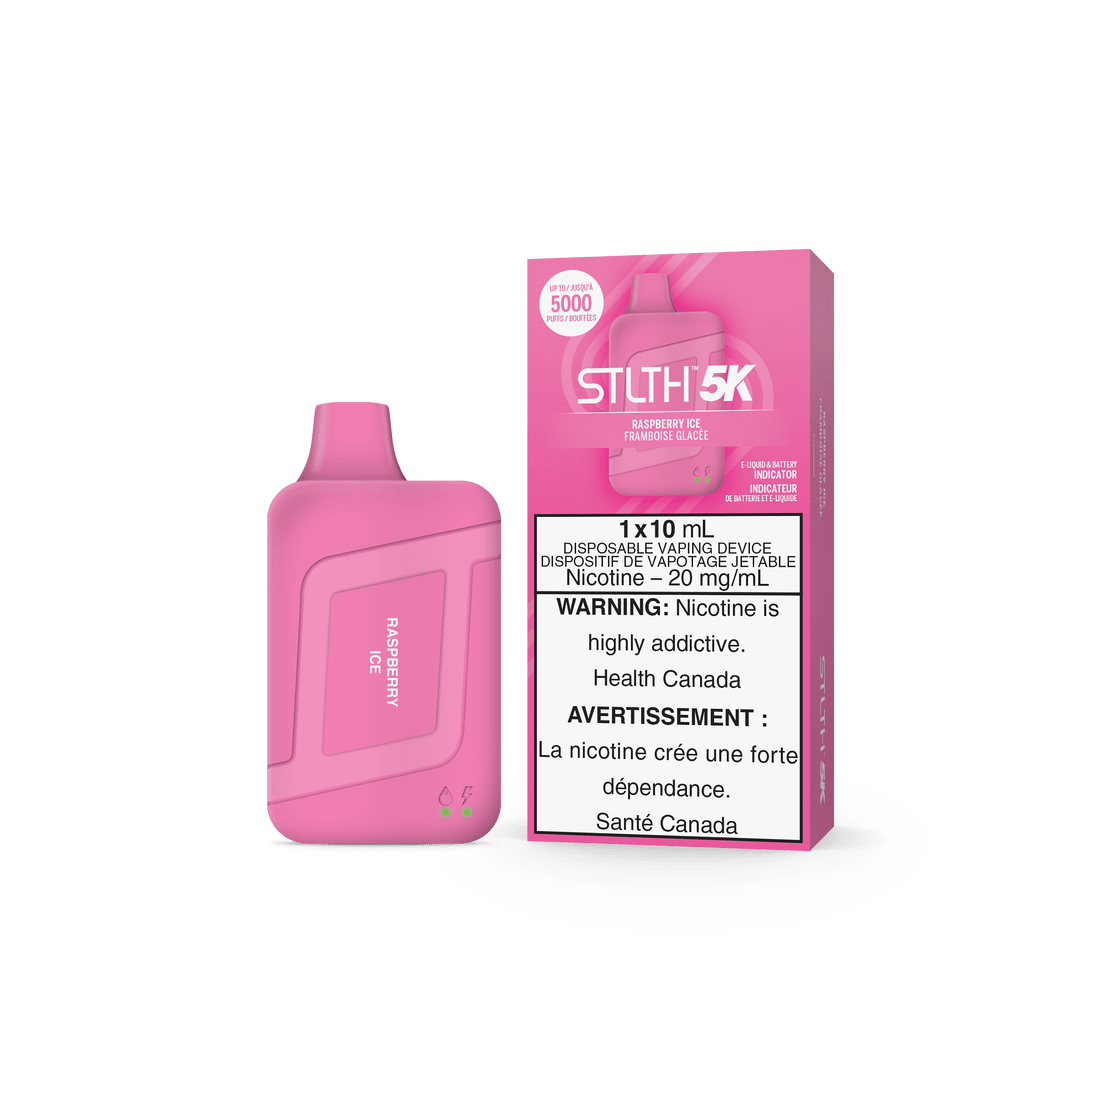 STLTH 5K - Raspberry Ice - Vapor Shoppe